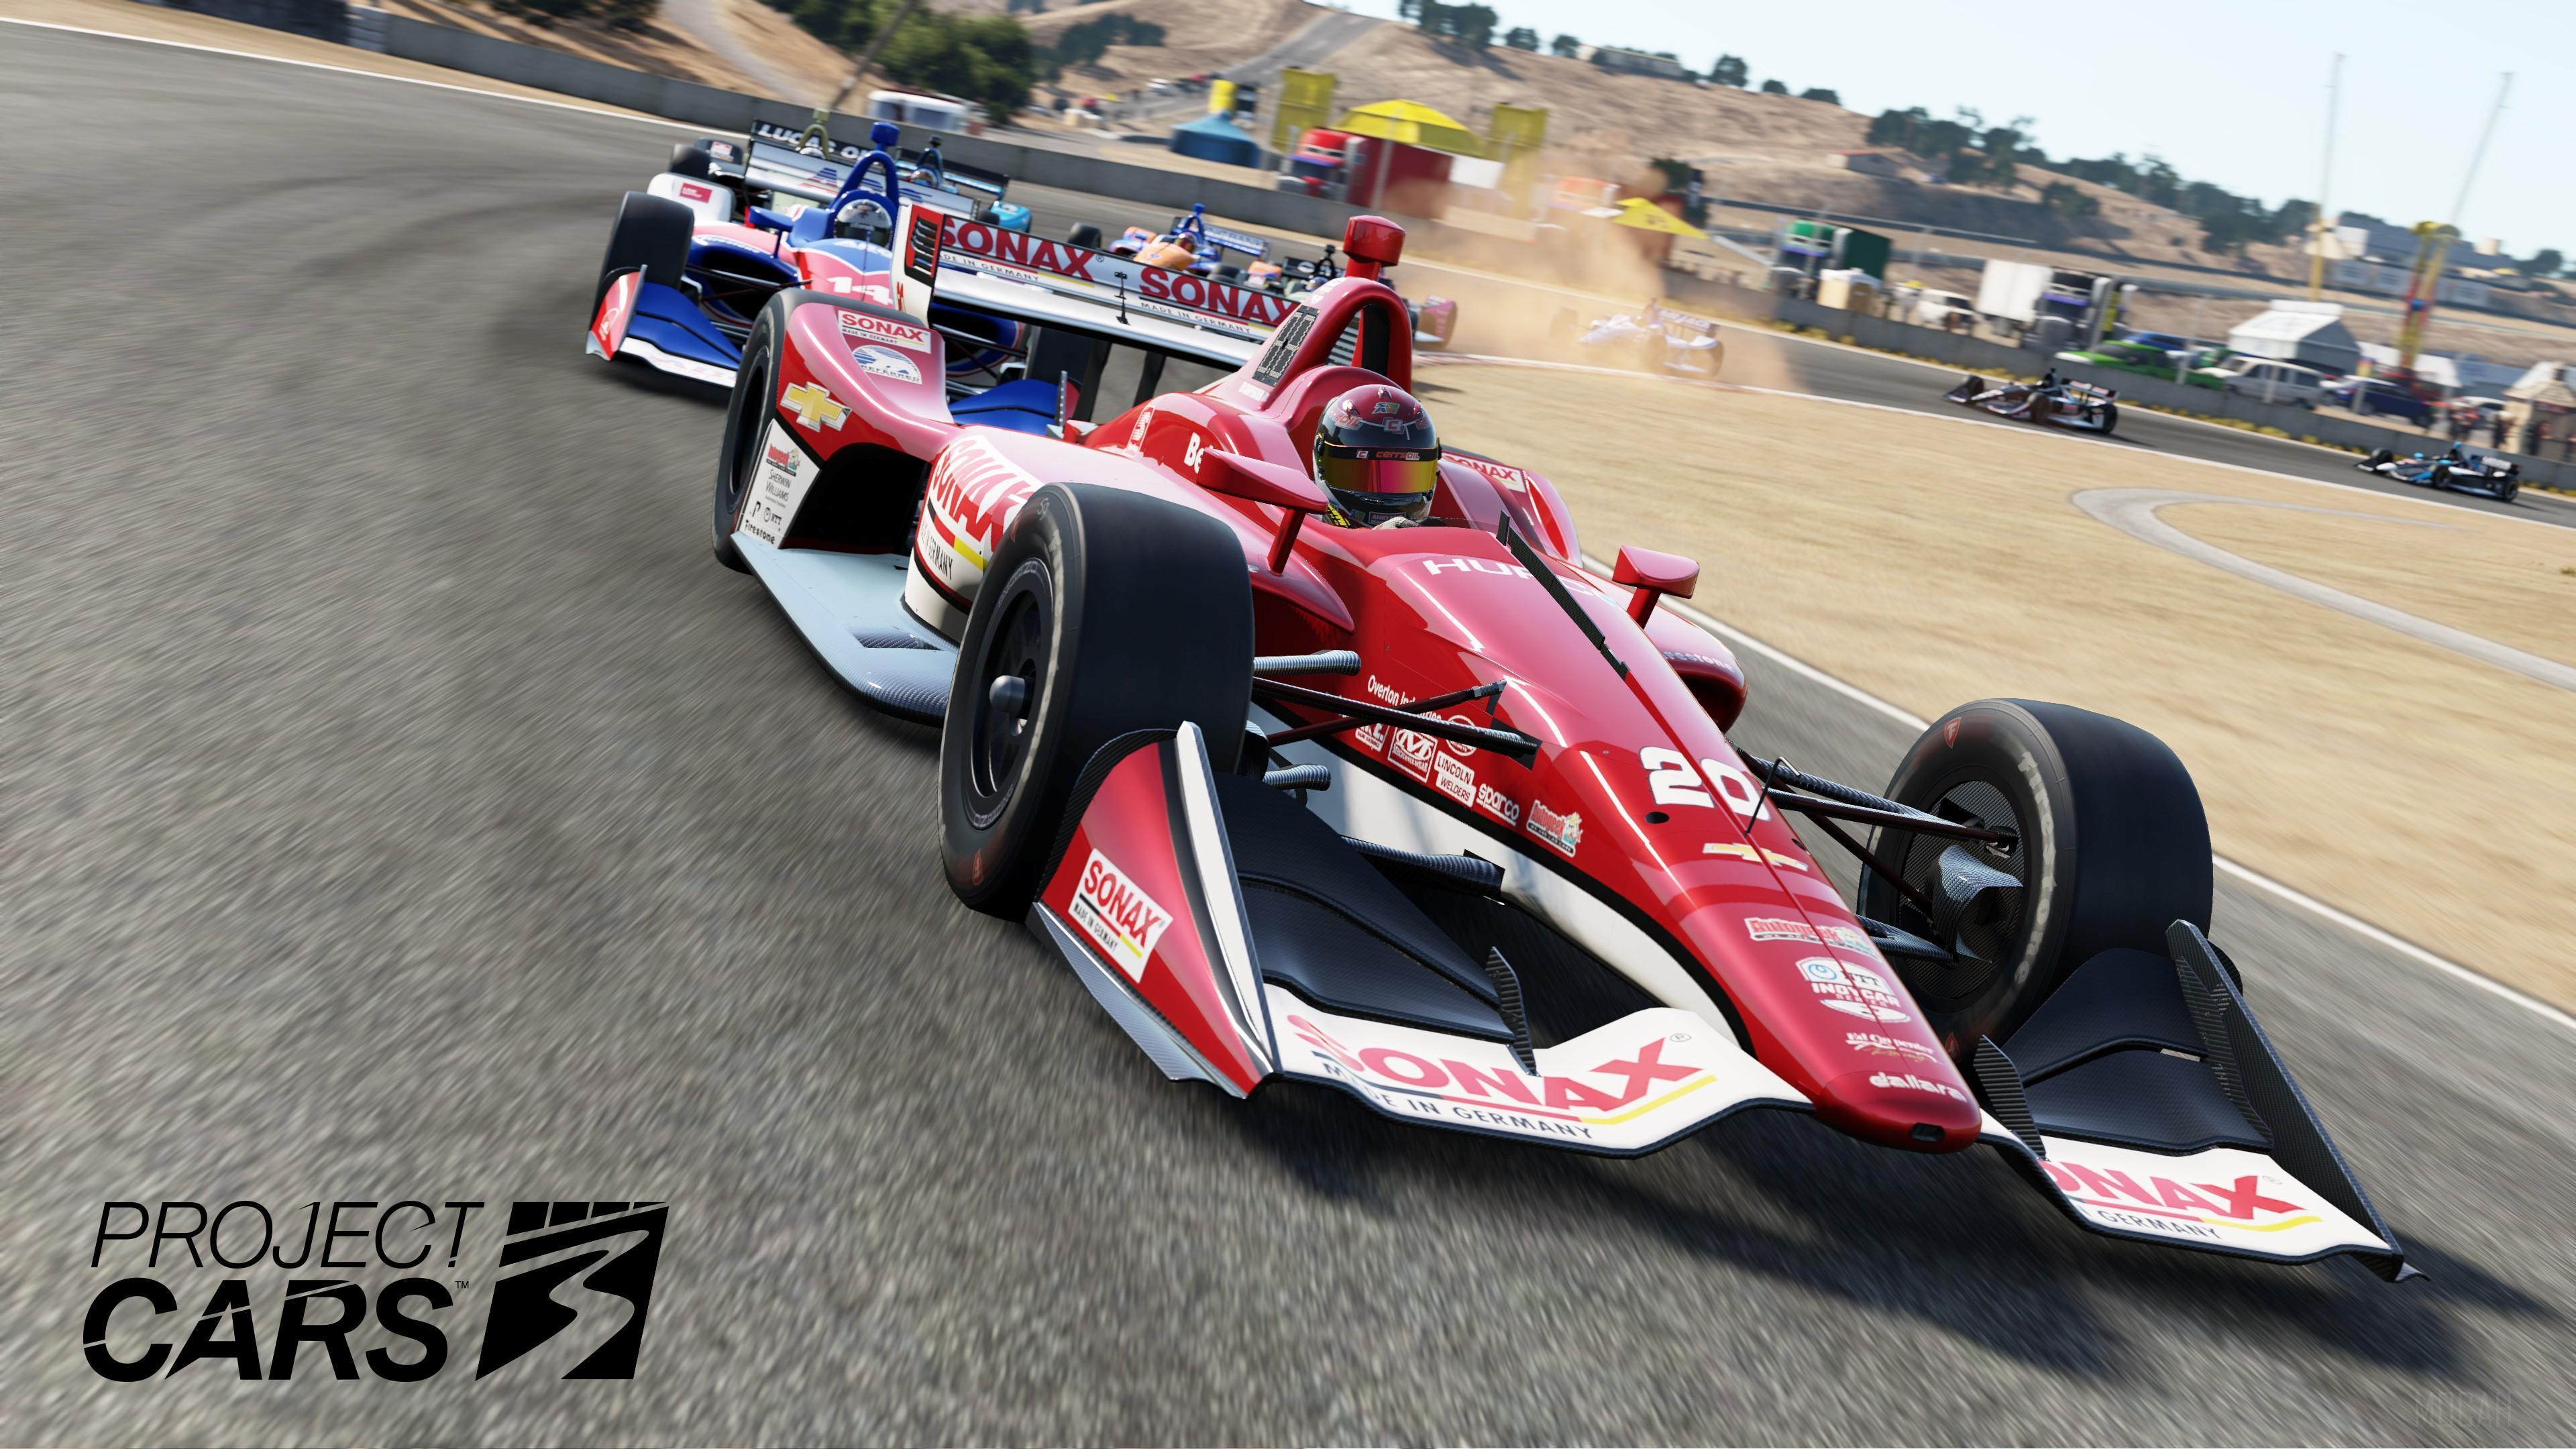 HD wallpaper, Project Cars 3, Racing, Formula 1, Car 4K, Video Game